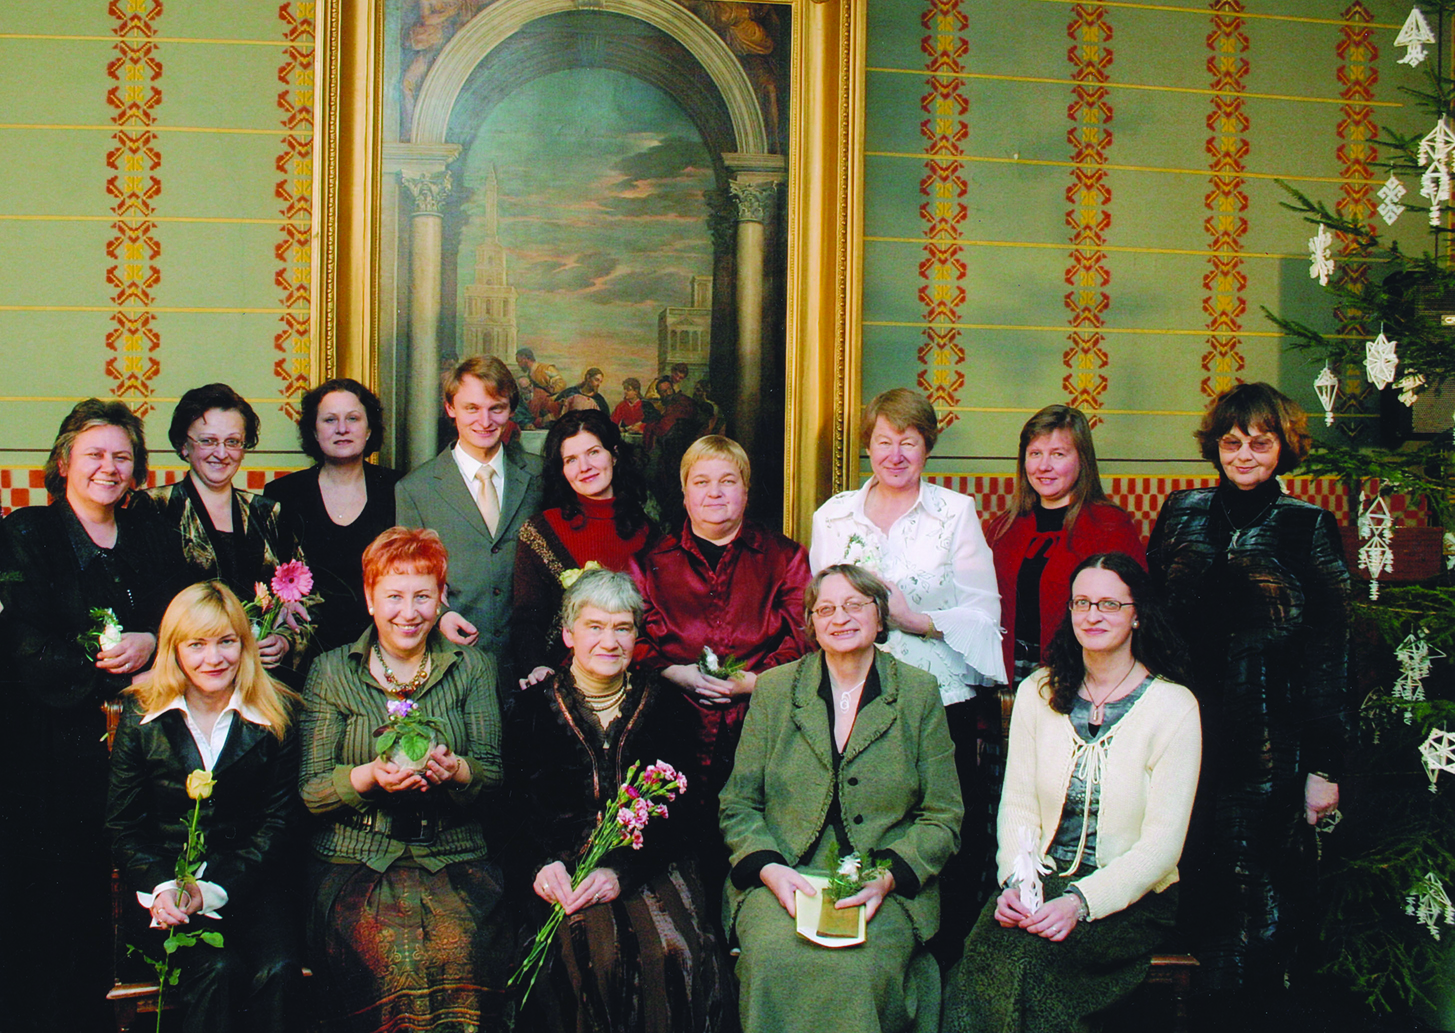 Moterų menininkių vakaras 2007 m. Sėdi iš kairės: poetės T. Marcinkevičiūtė, A. Ruseckaitė, A. Puišytė, prozininkė R. Vinciūnienė, tautodailininkė E. Vindašienė; stovi pianistė A. Eitmanavičiūtė, solistė S. Martinaitytė, aktorė V. Grigaitytė, solistas L. Mikalauskas, poetės E. Drungytė, D. Zelčiūtė, Z. Gaižauskaitė, R. Mikuckytė ir I. Labokė.